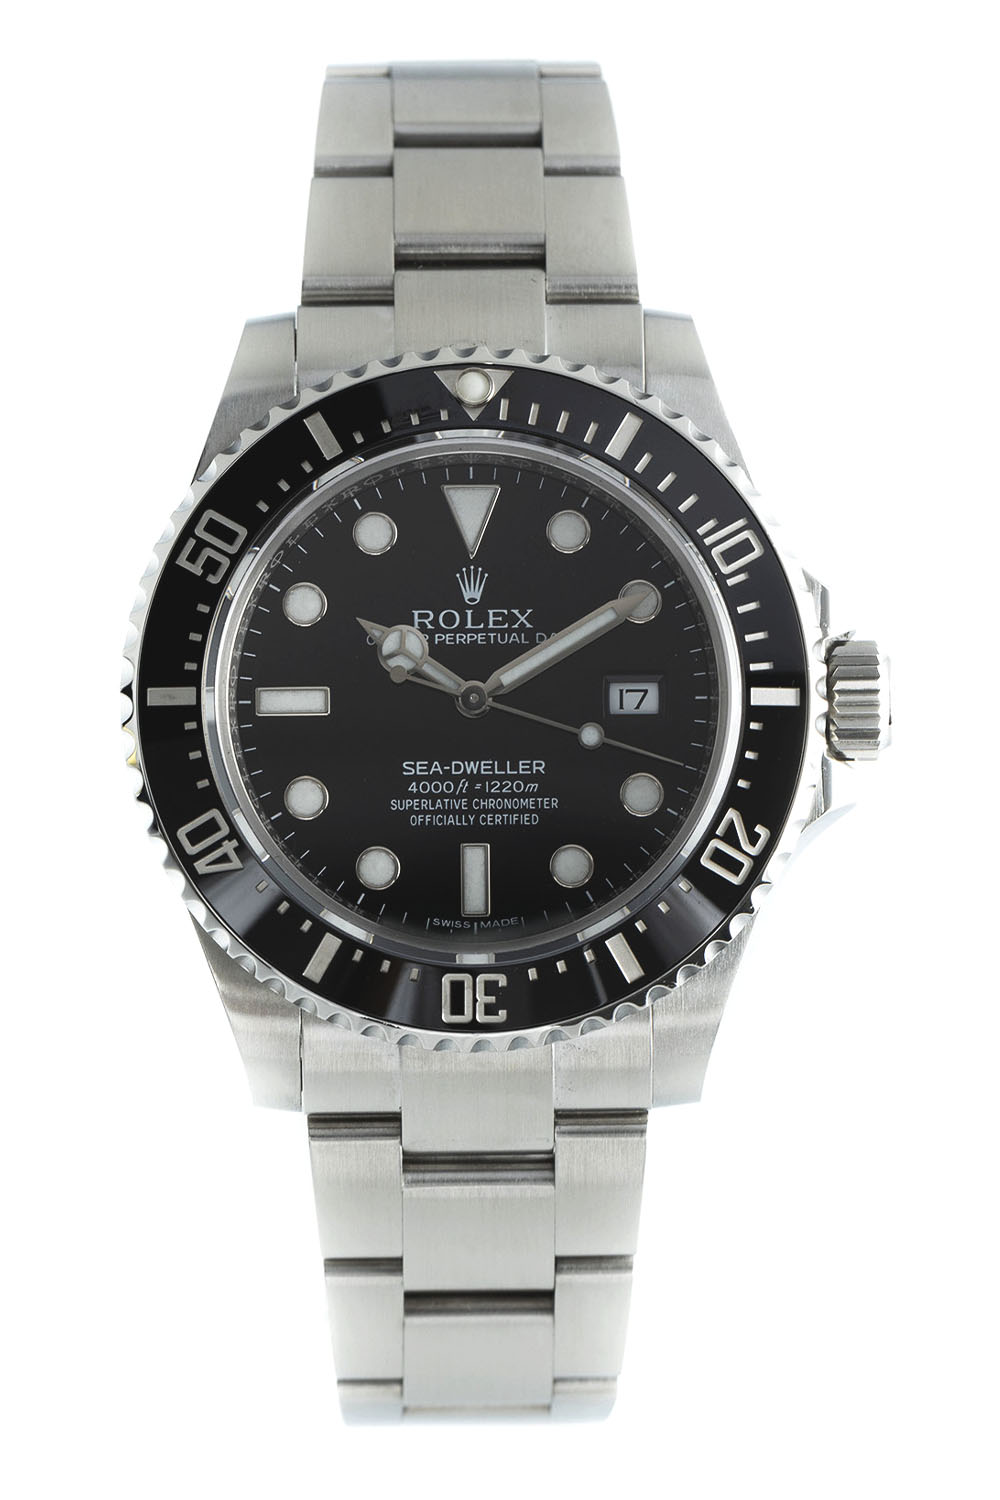 Rolex Sea-Dweller Reference 116600 - image by Zeitauktion